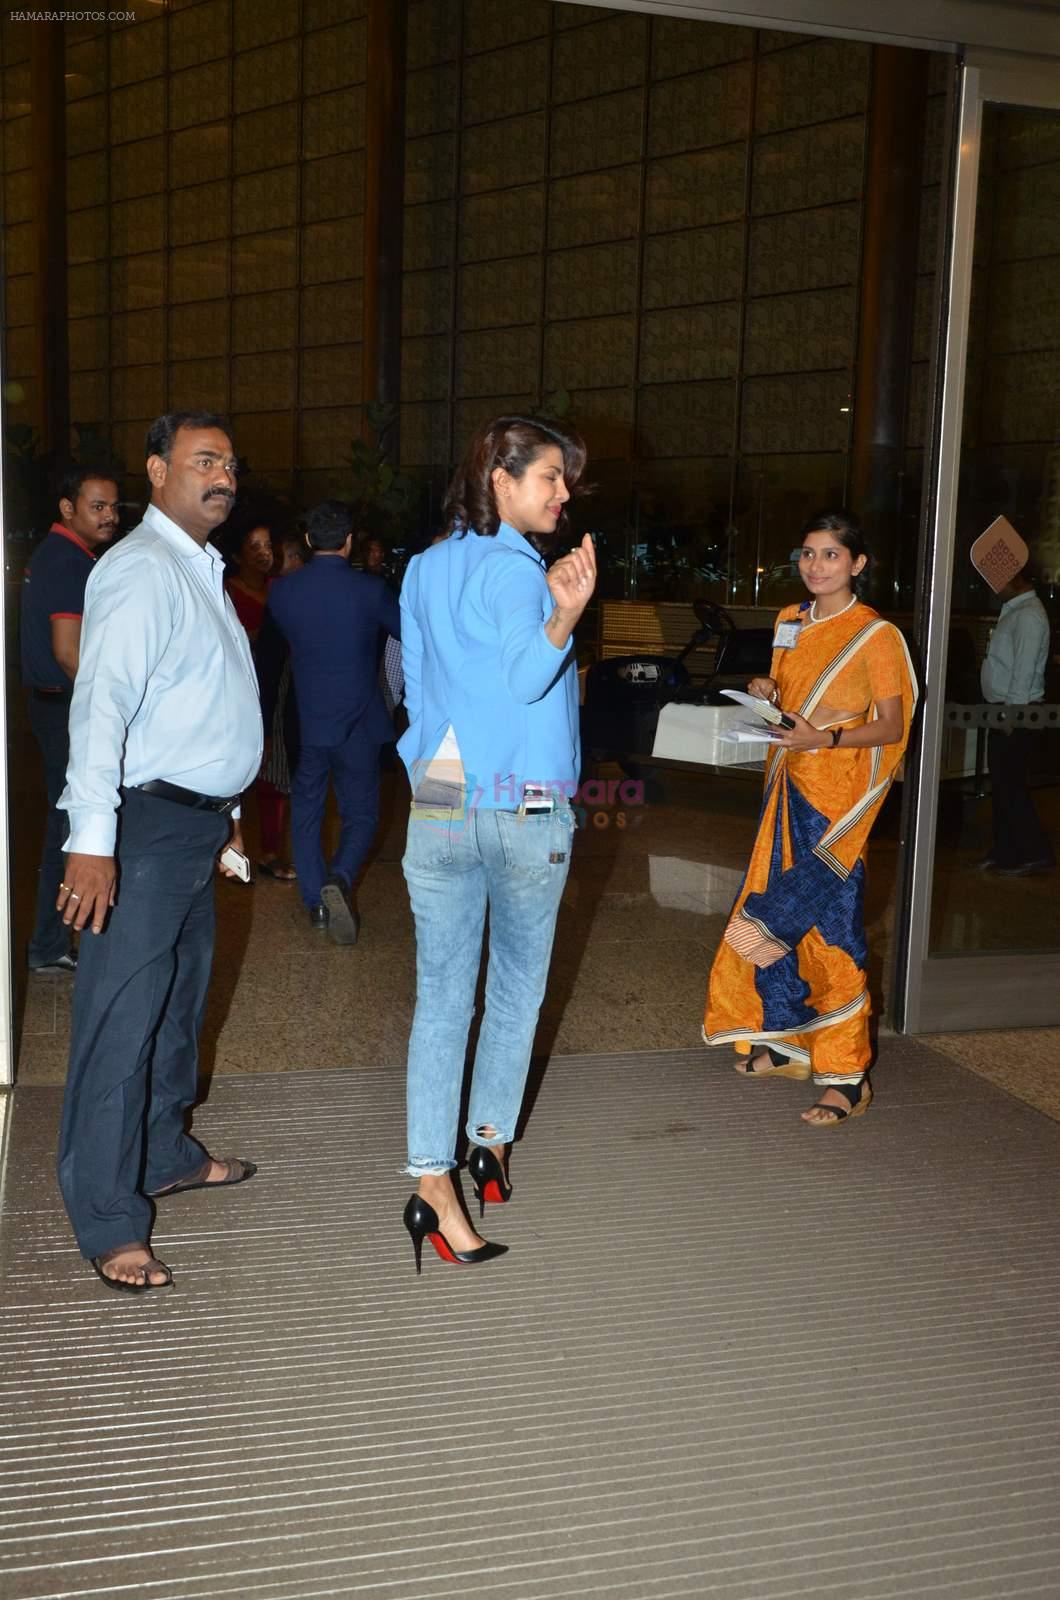 Priyanka Chopra leaves for AIBA on 28th May 2015